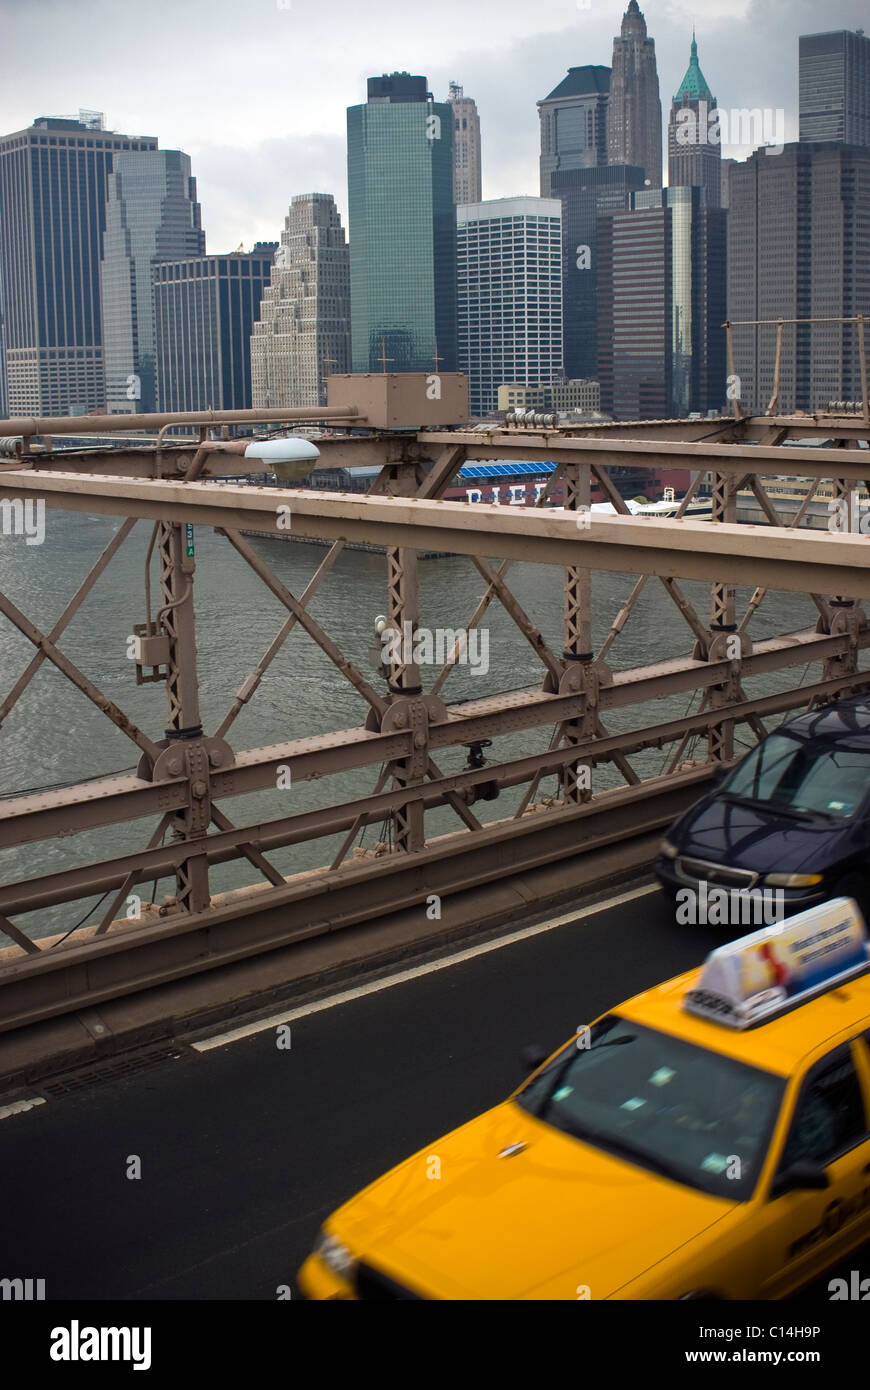 New York taxi jaune traverser le pont de Brooklyn, New York, USA Banque D'Images